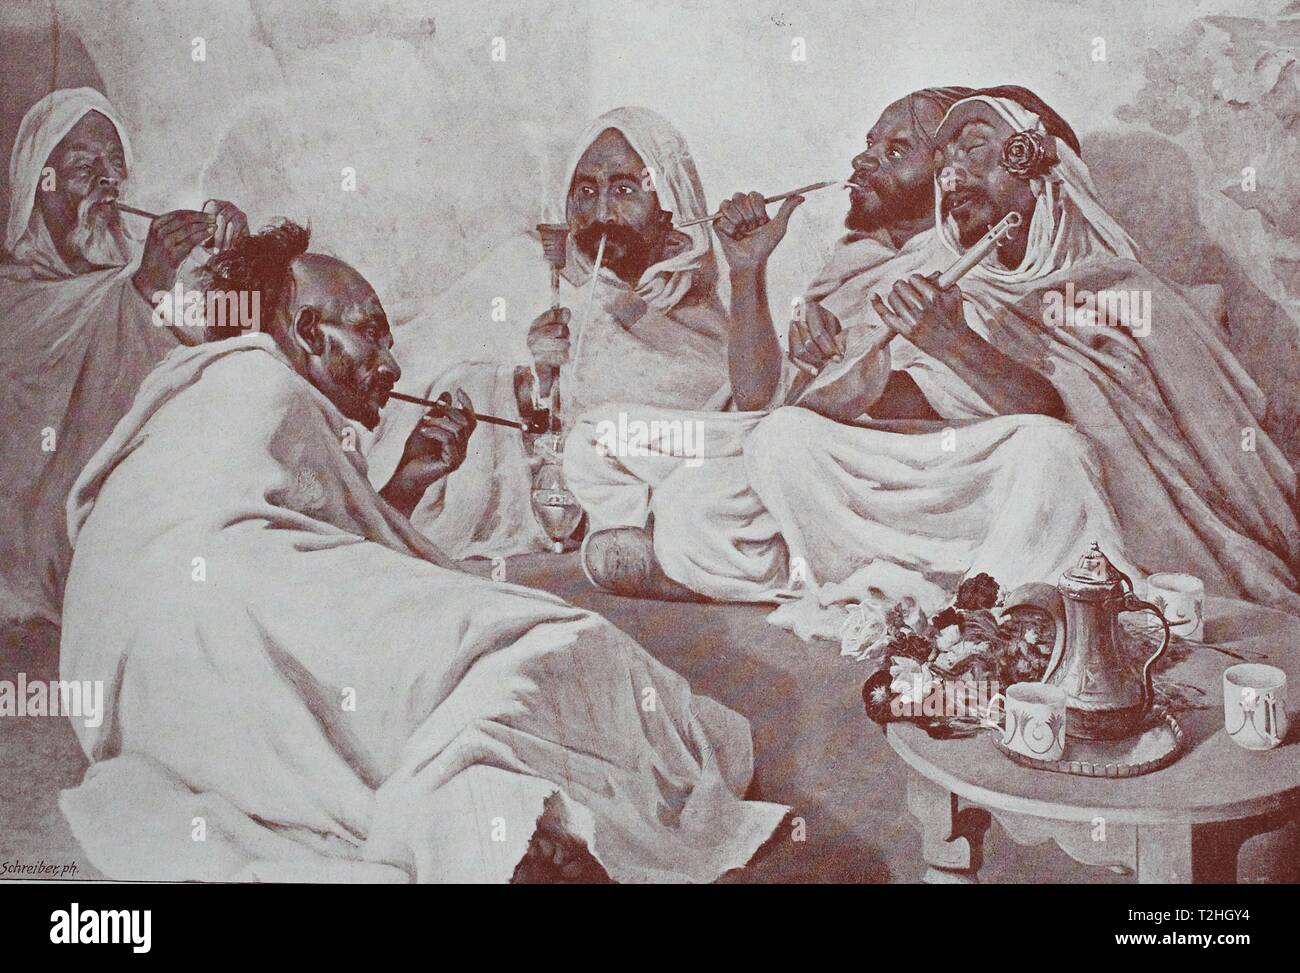 Hashish smoking, arab men with drug cigarettes, 1899, historical illustration, Arabia Stock Photo